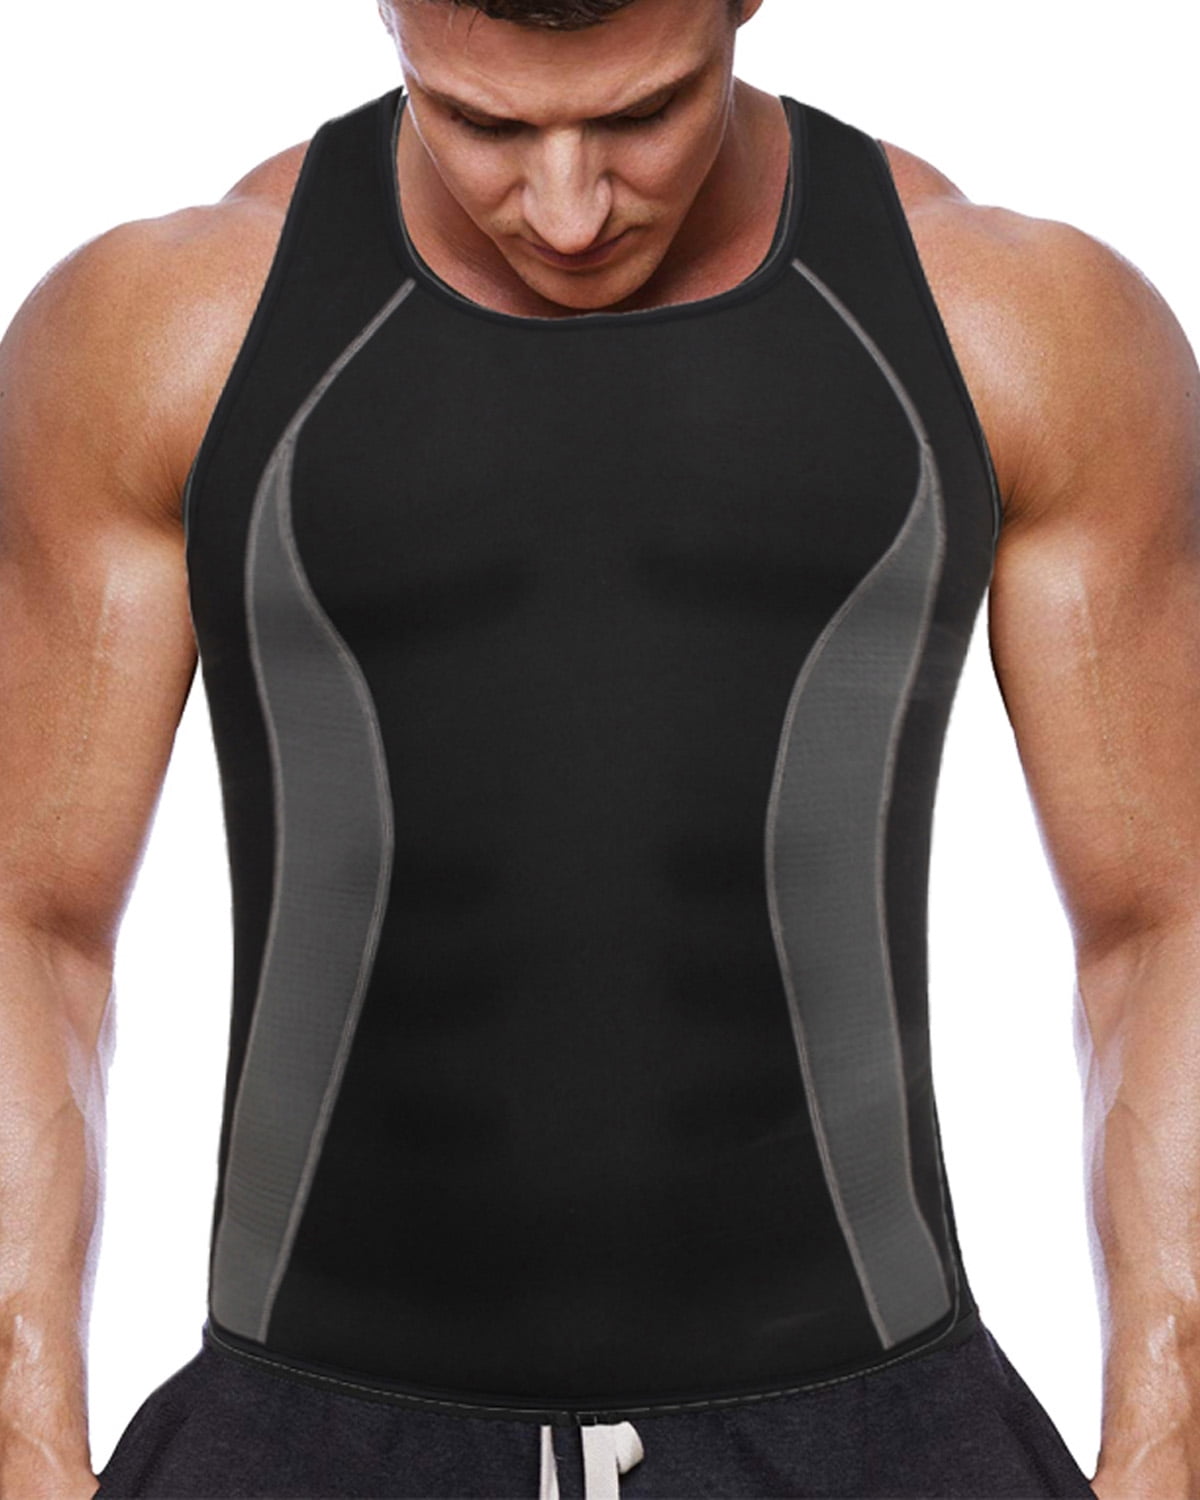 Men Sauna Sweat Vest Neoprene Waist Trainer Body Shaper Gym Weight Loss Tank Top 